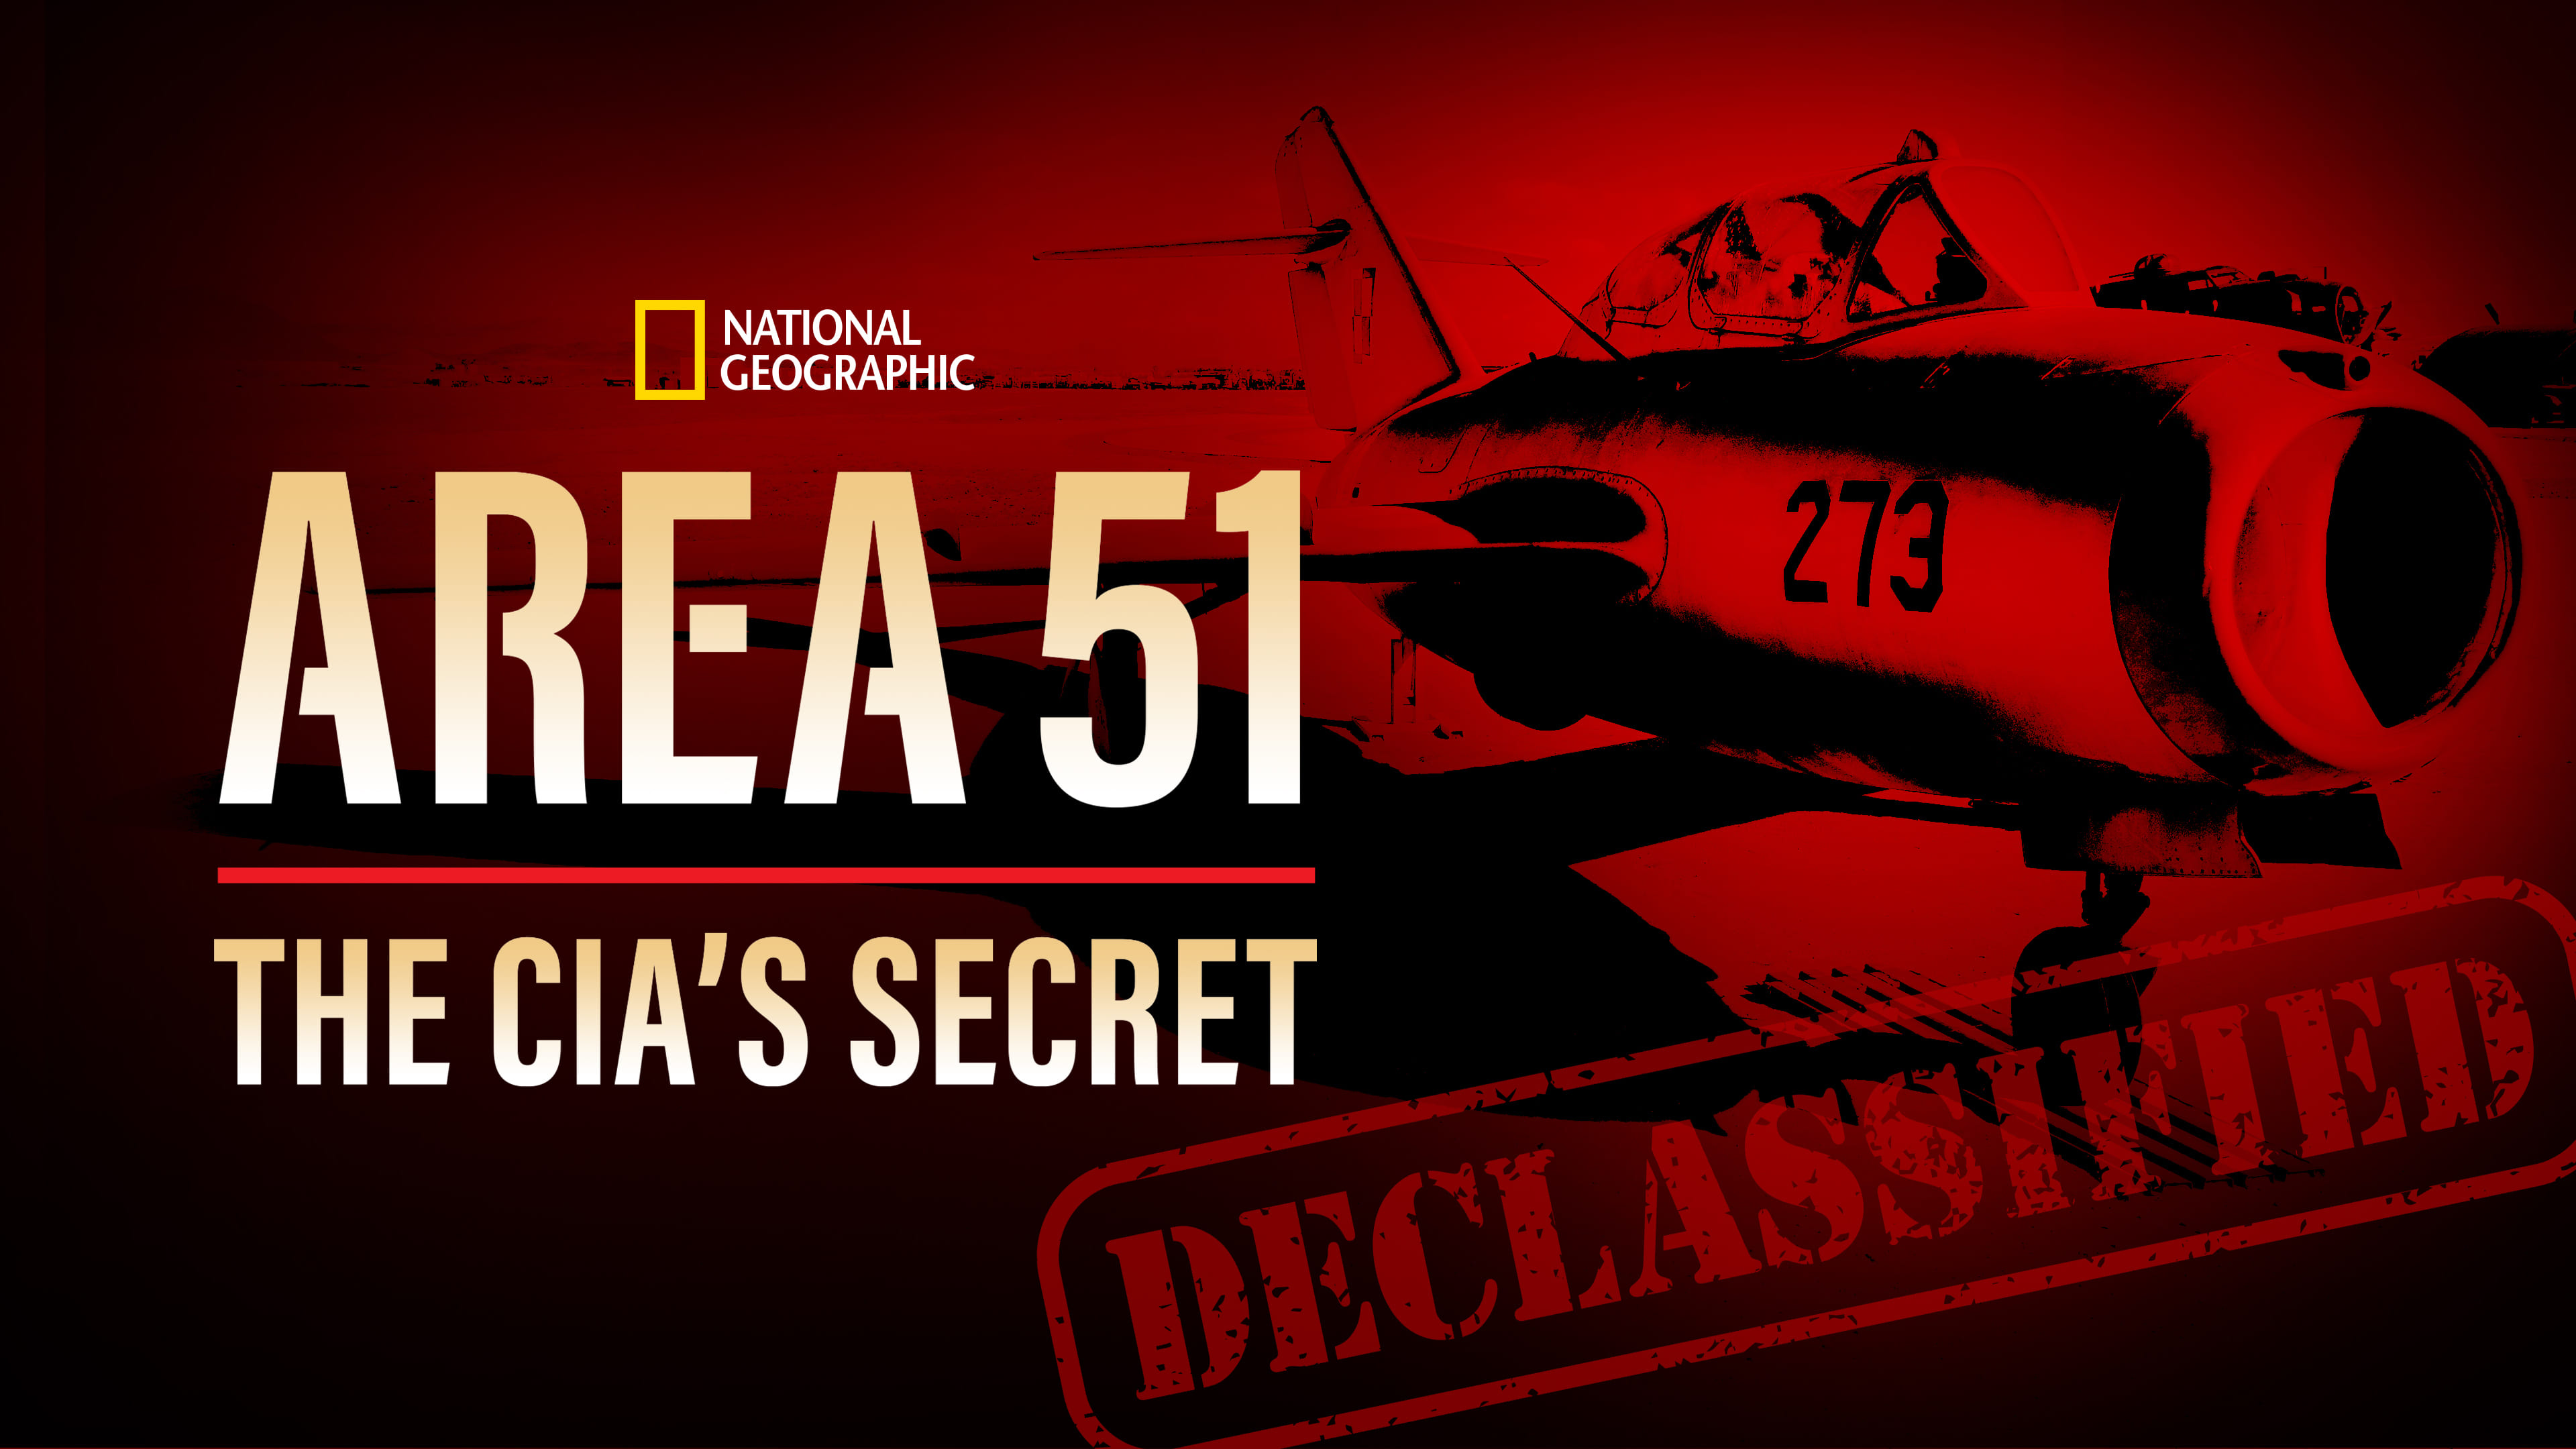 Area 51: The CIA's Secret (2014)